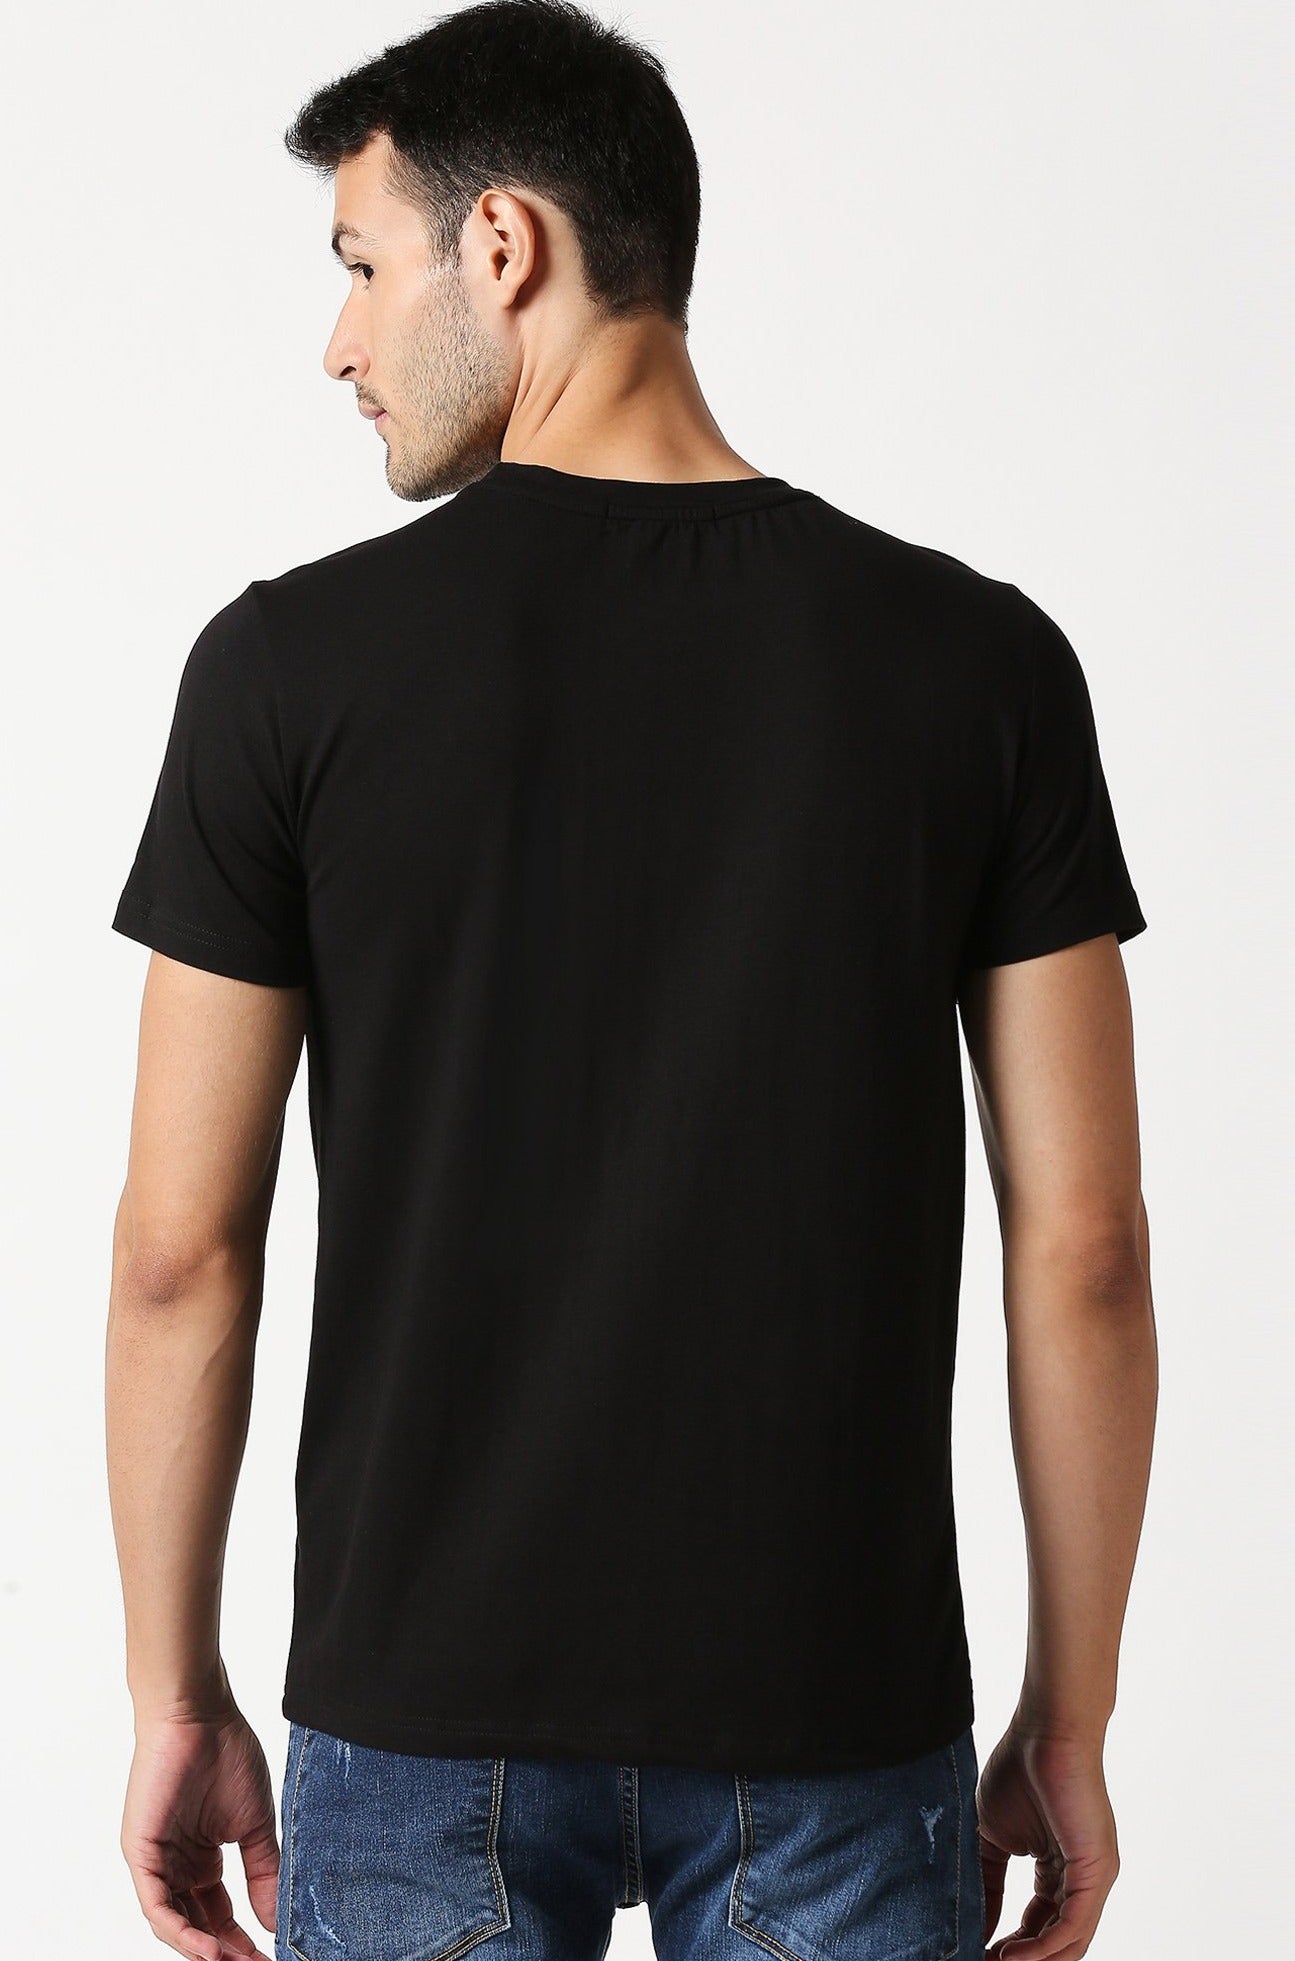 Fostino Auckland Black Round Neck T-Shirt - Fostino - T-Shirts